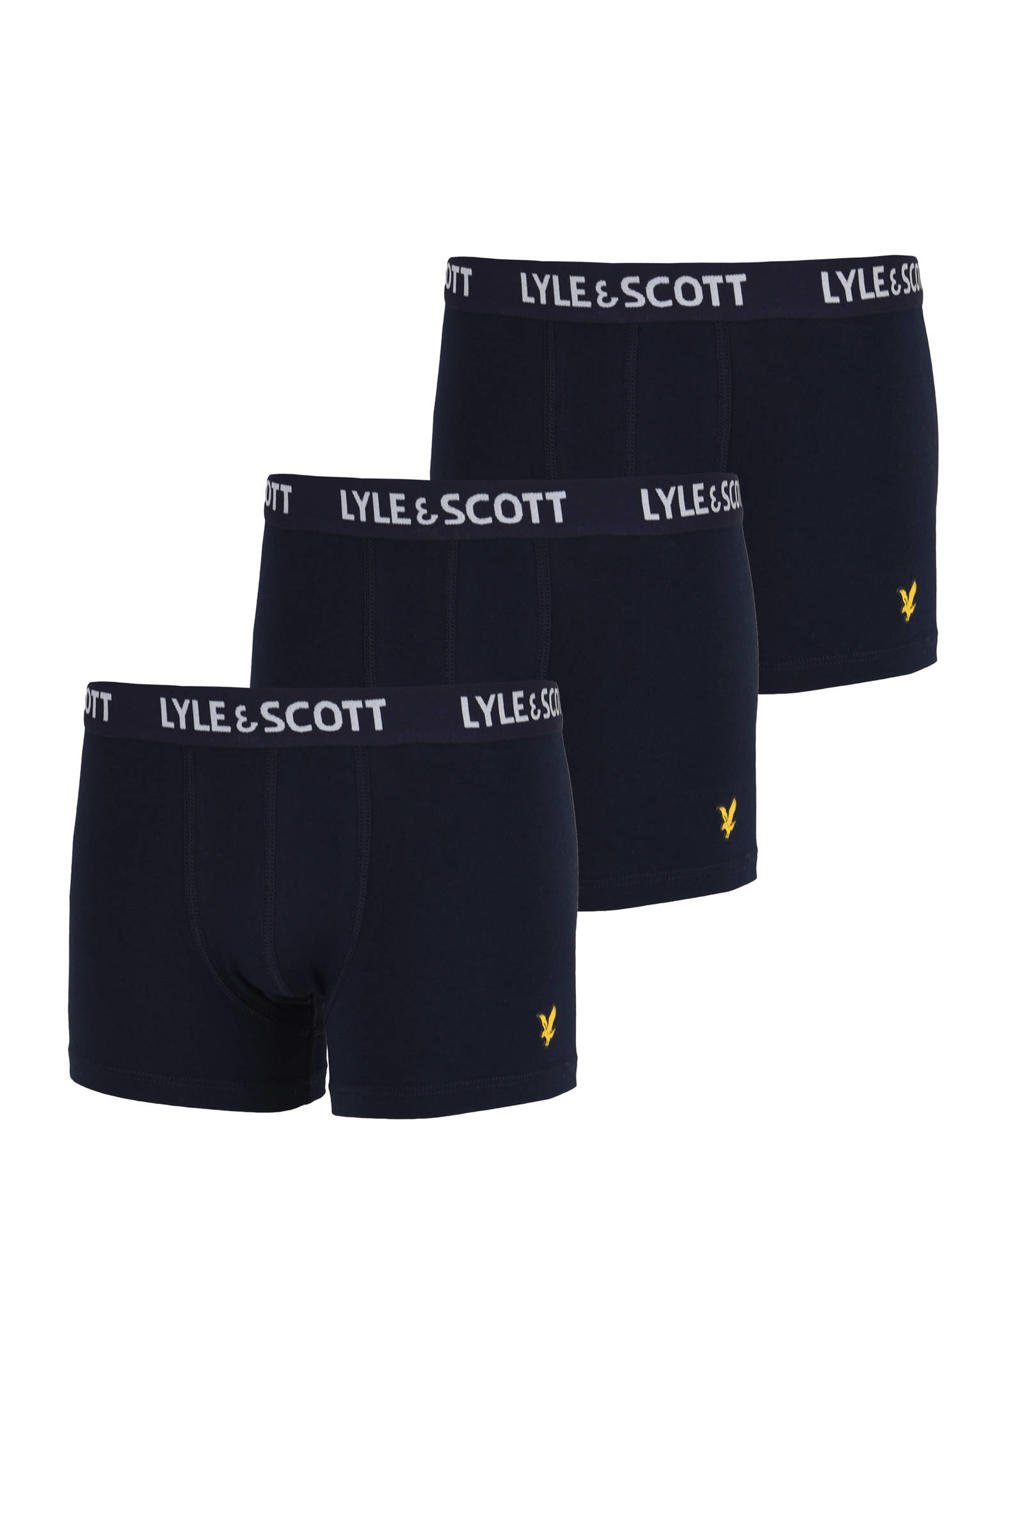 Lyle & Scott boxershort - set van 3 donkerblauw